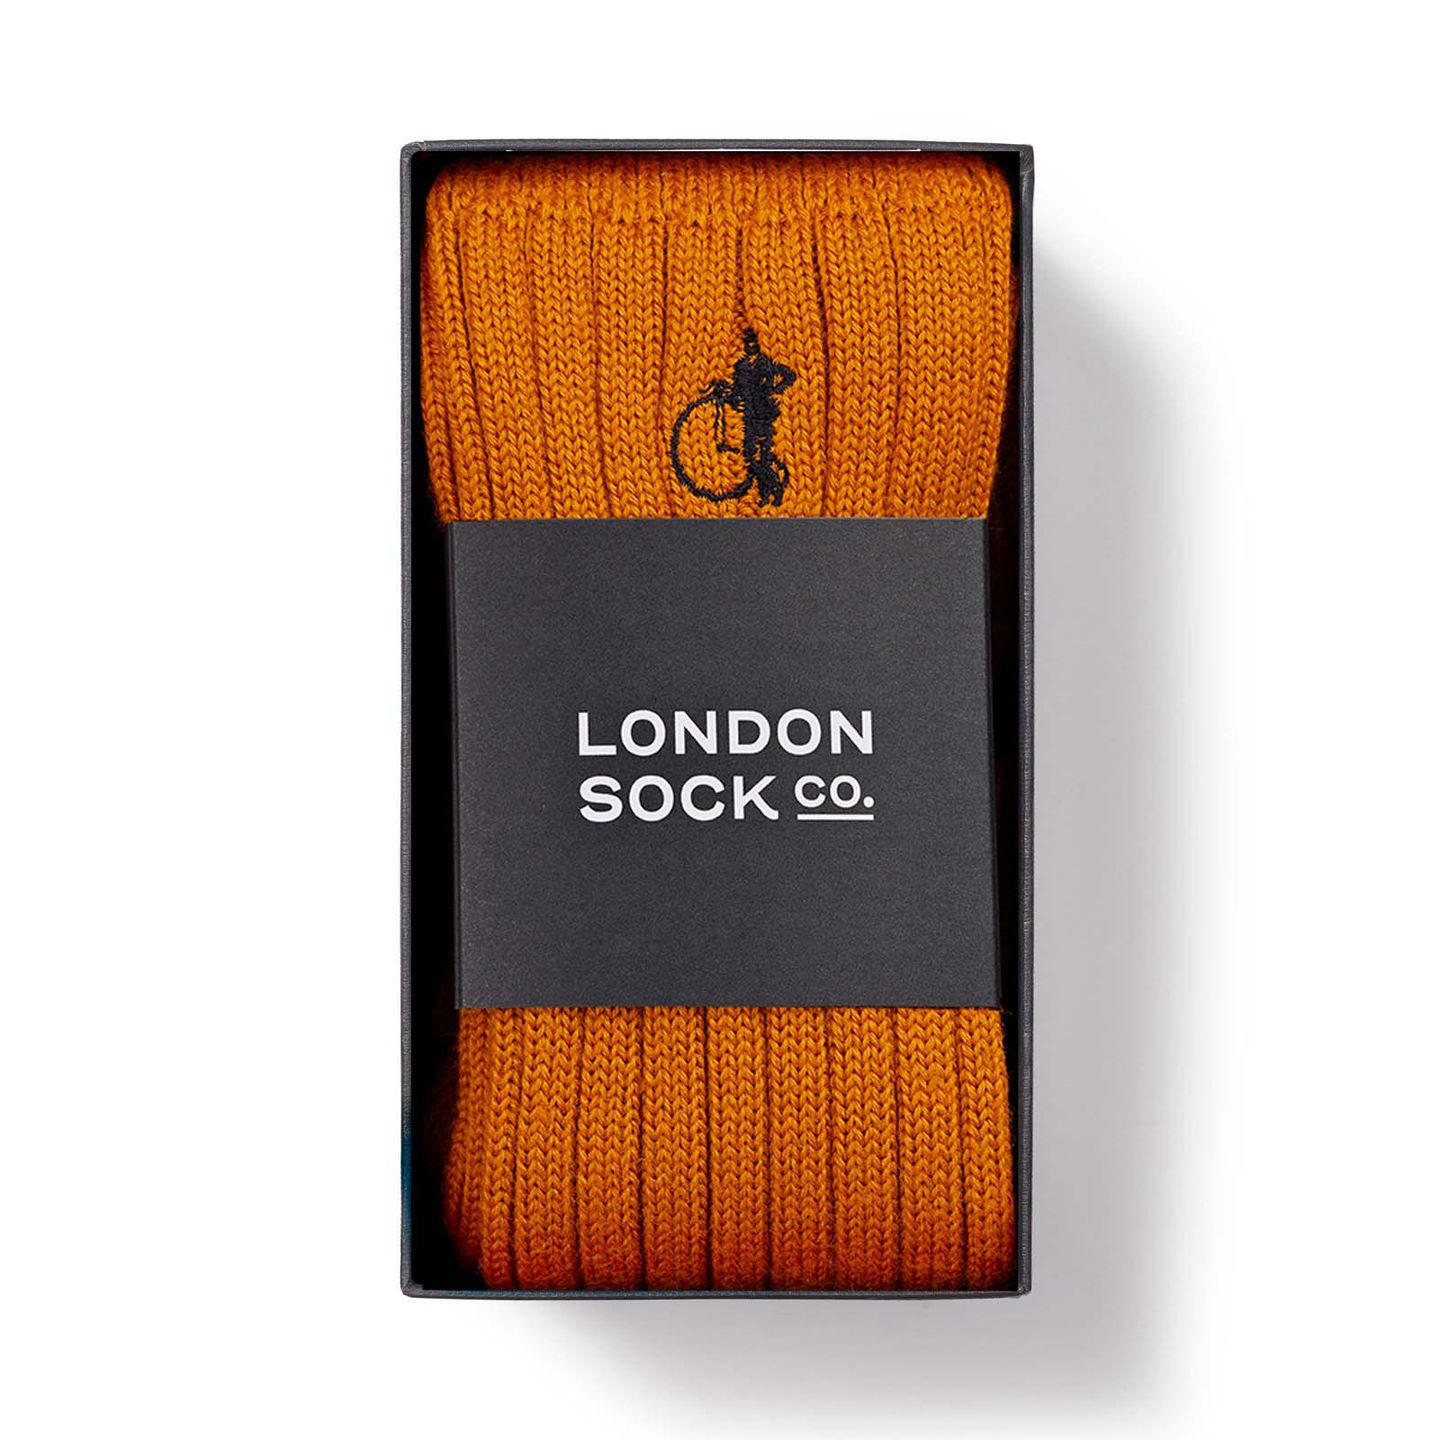 A pair of orange socks in a London Sock Company box